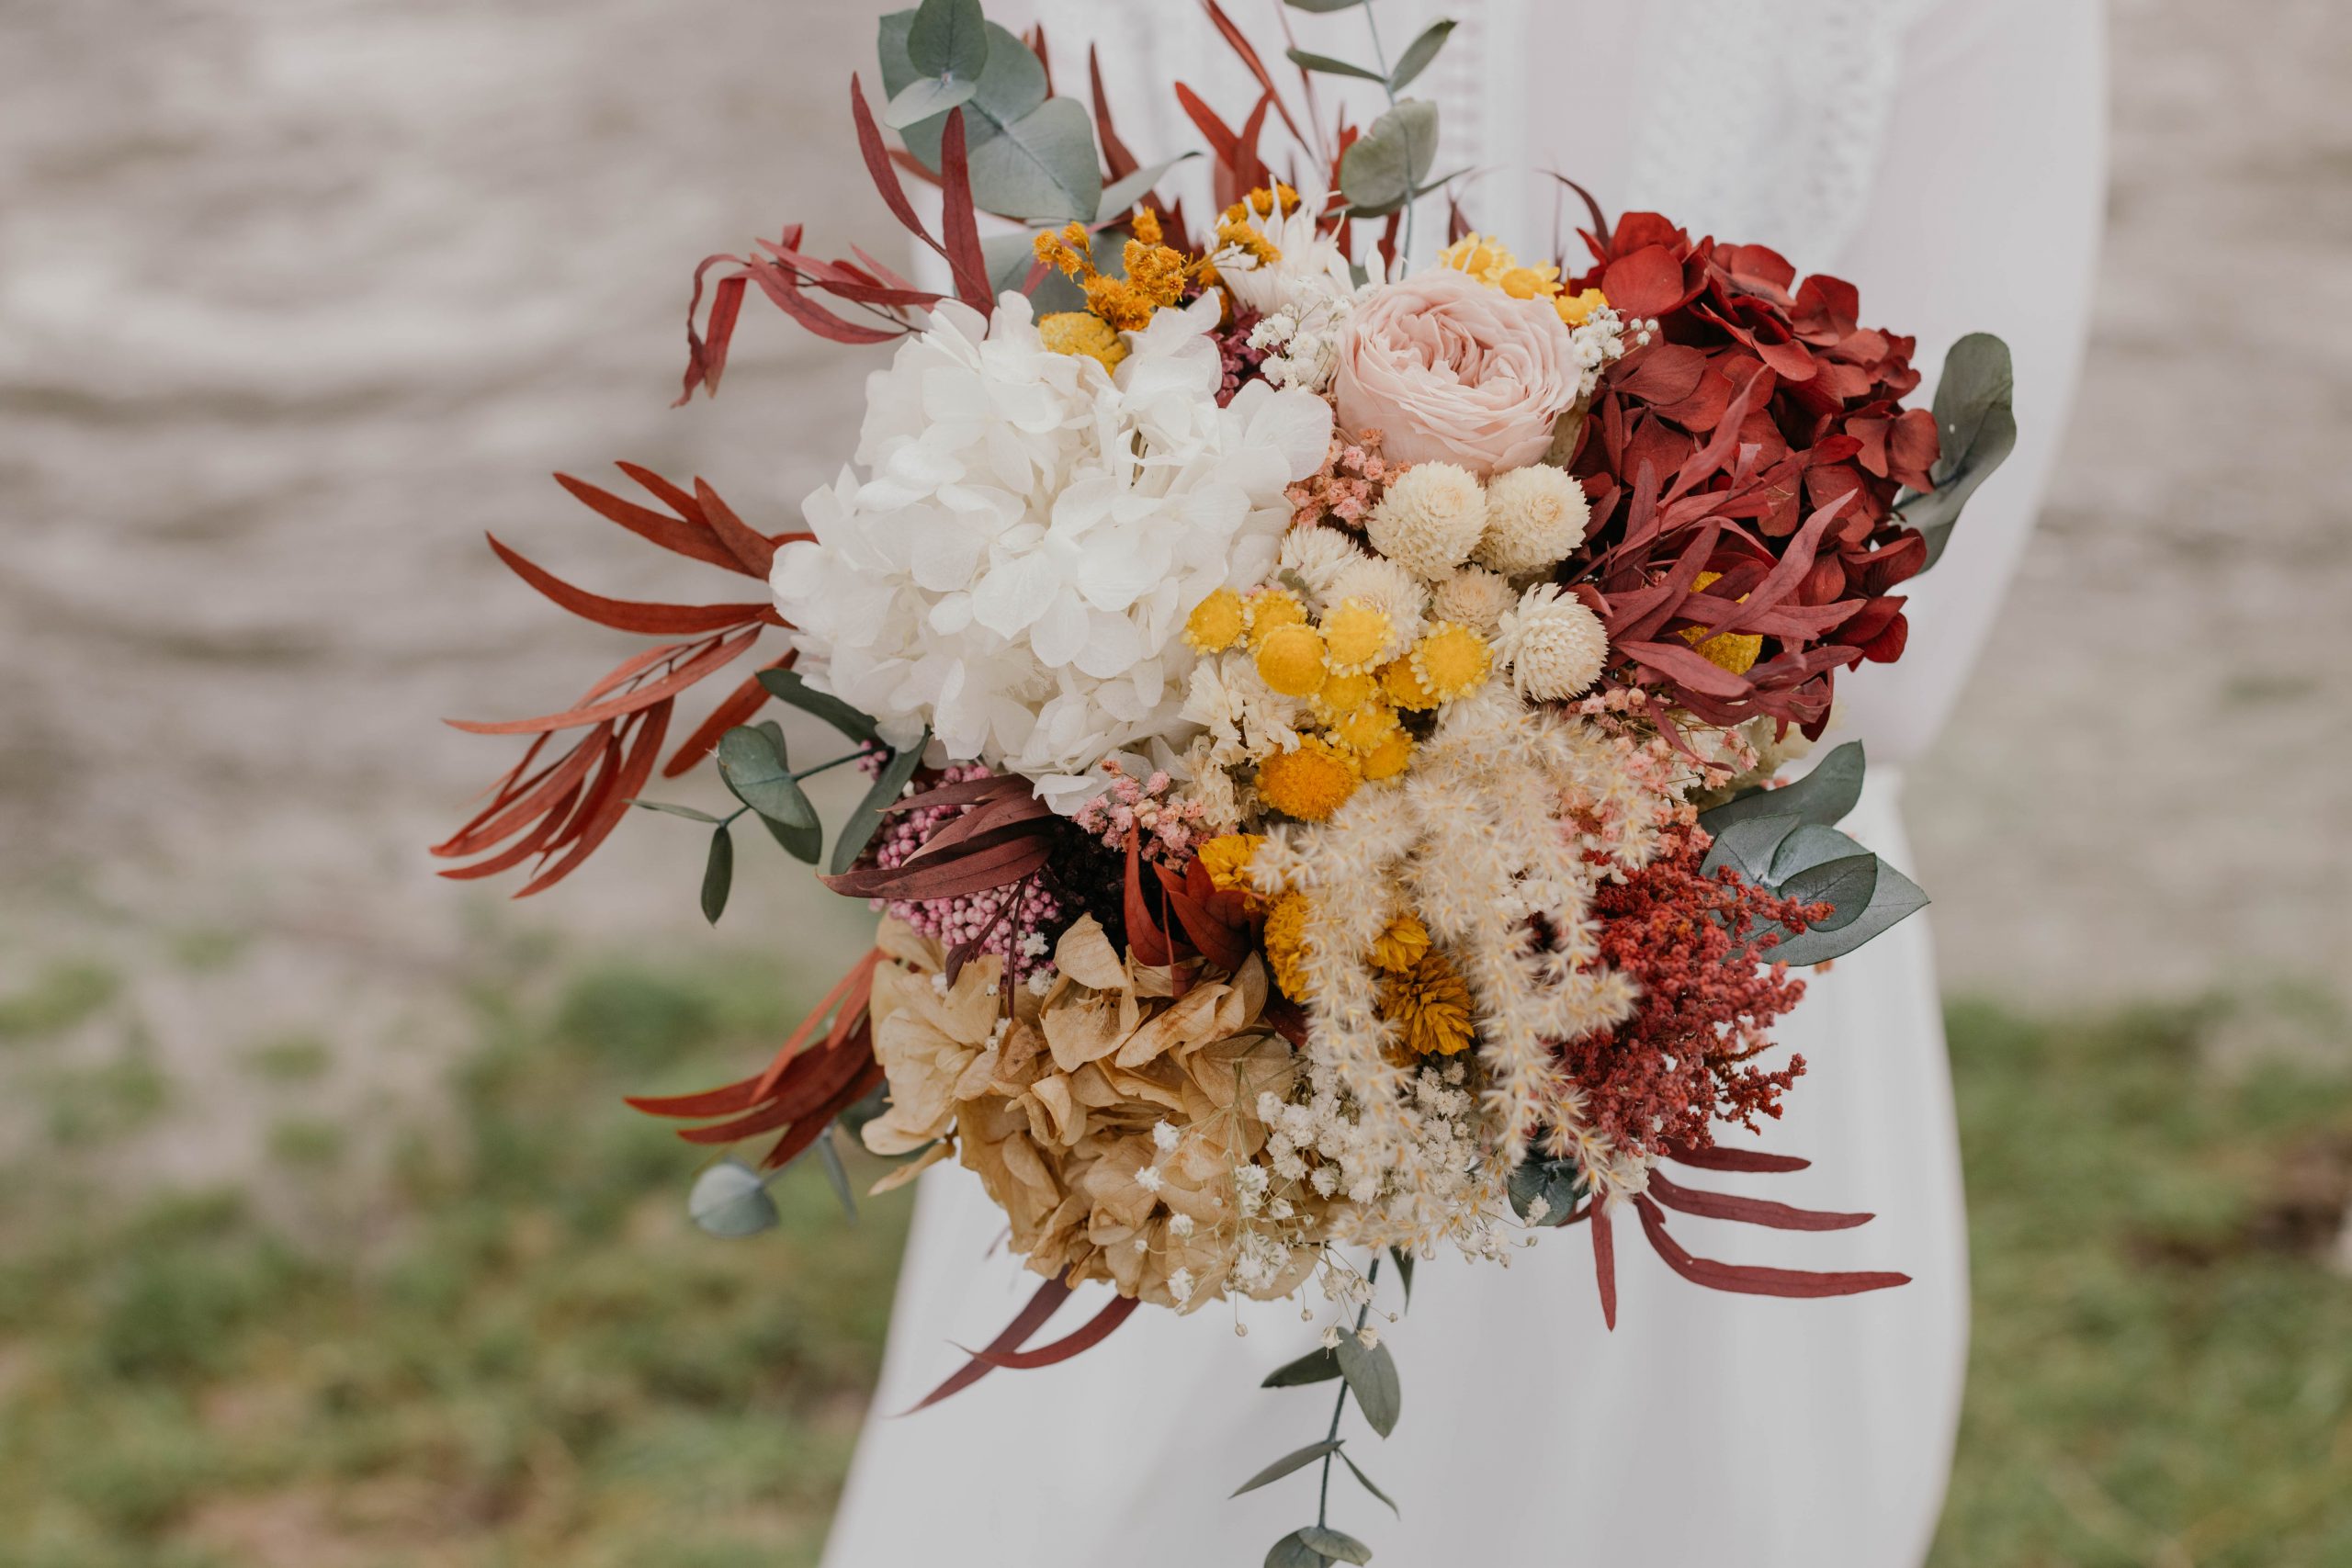 ETERNAL DISATI: Ramos de novia en flor preservada